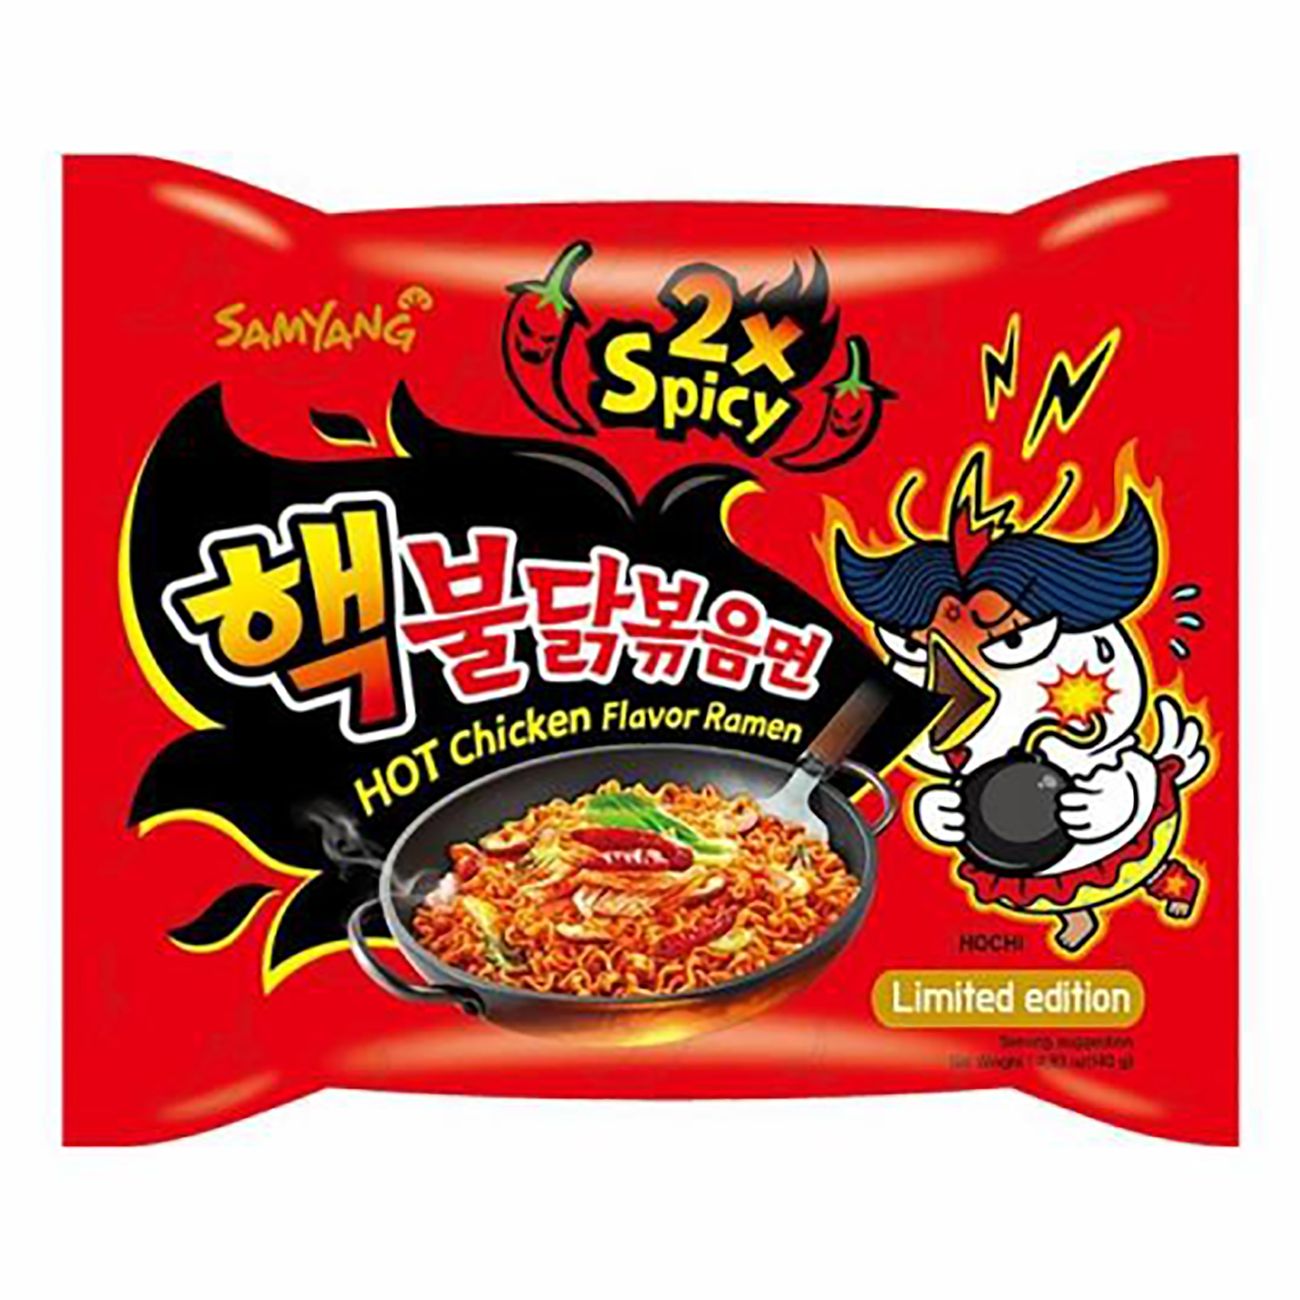 samyang-hot-chicken-ramen-noodles-2x-spicy-89844-2